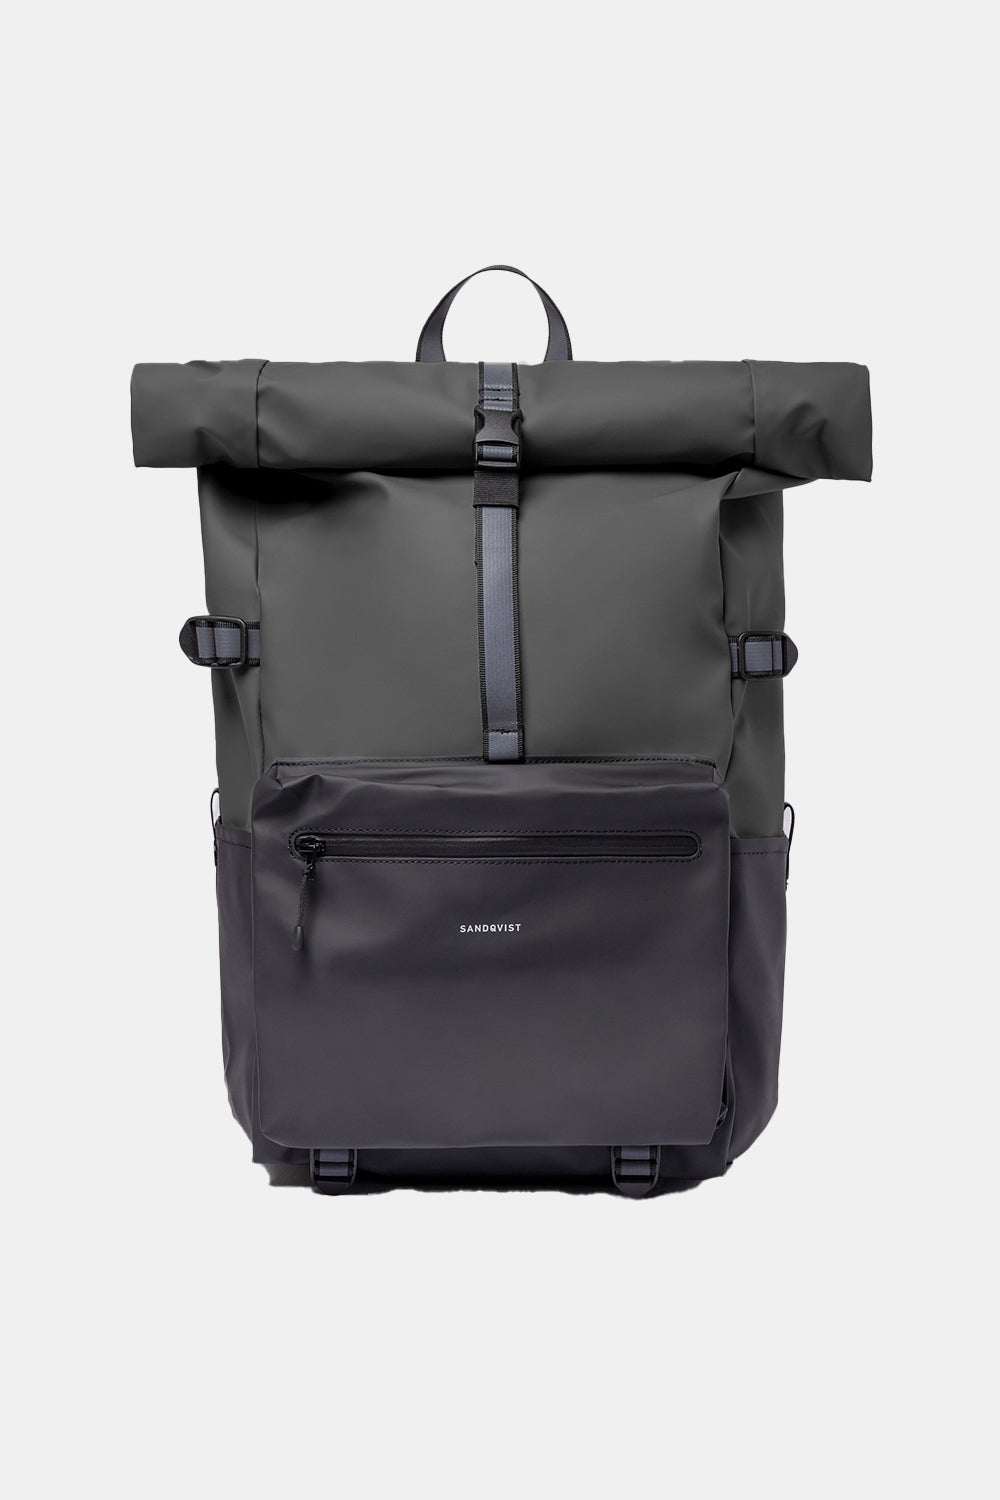 Sandqvist Ruben 2.0 Water-Resistant Rolltop Backpack (Multi Dark)